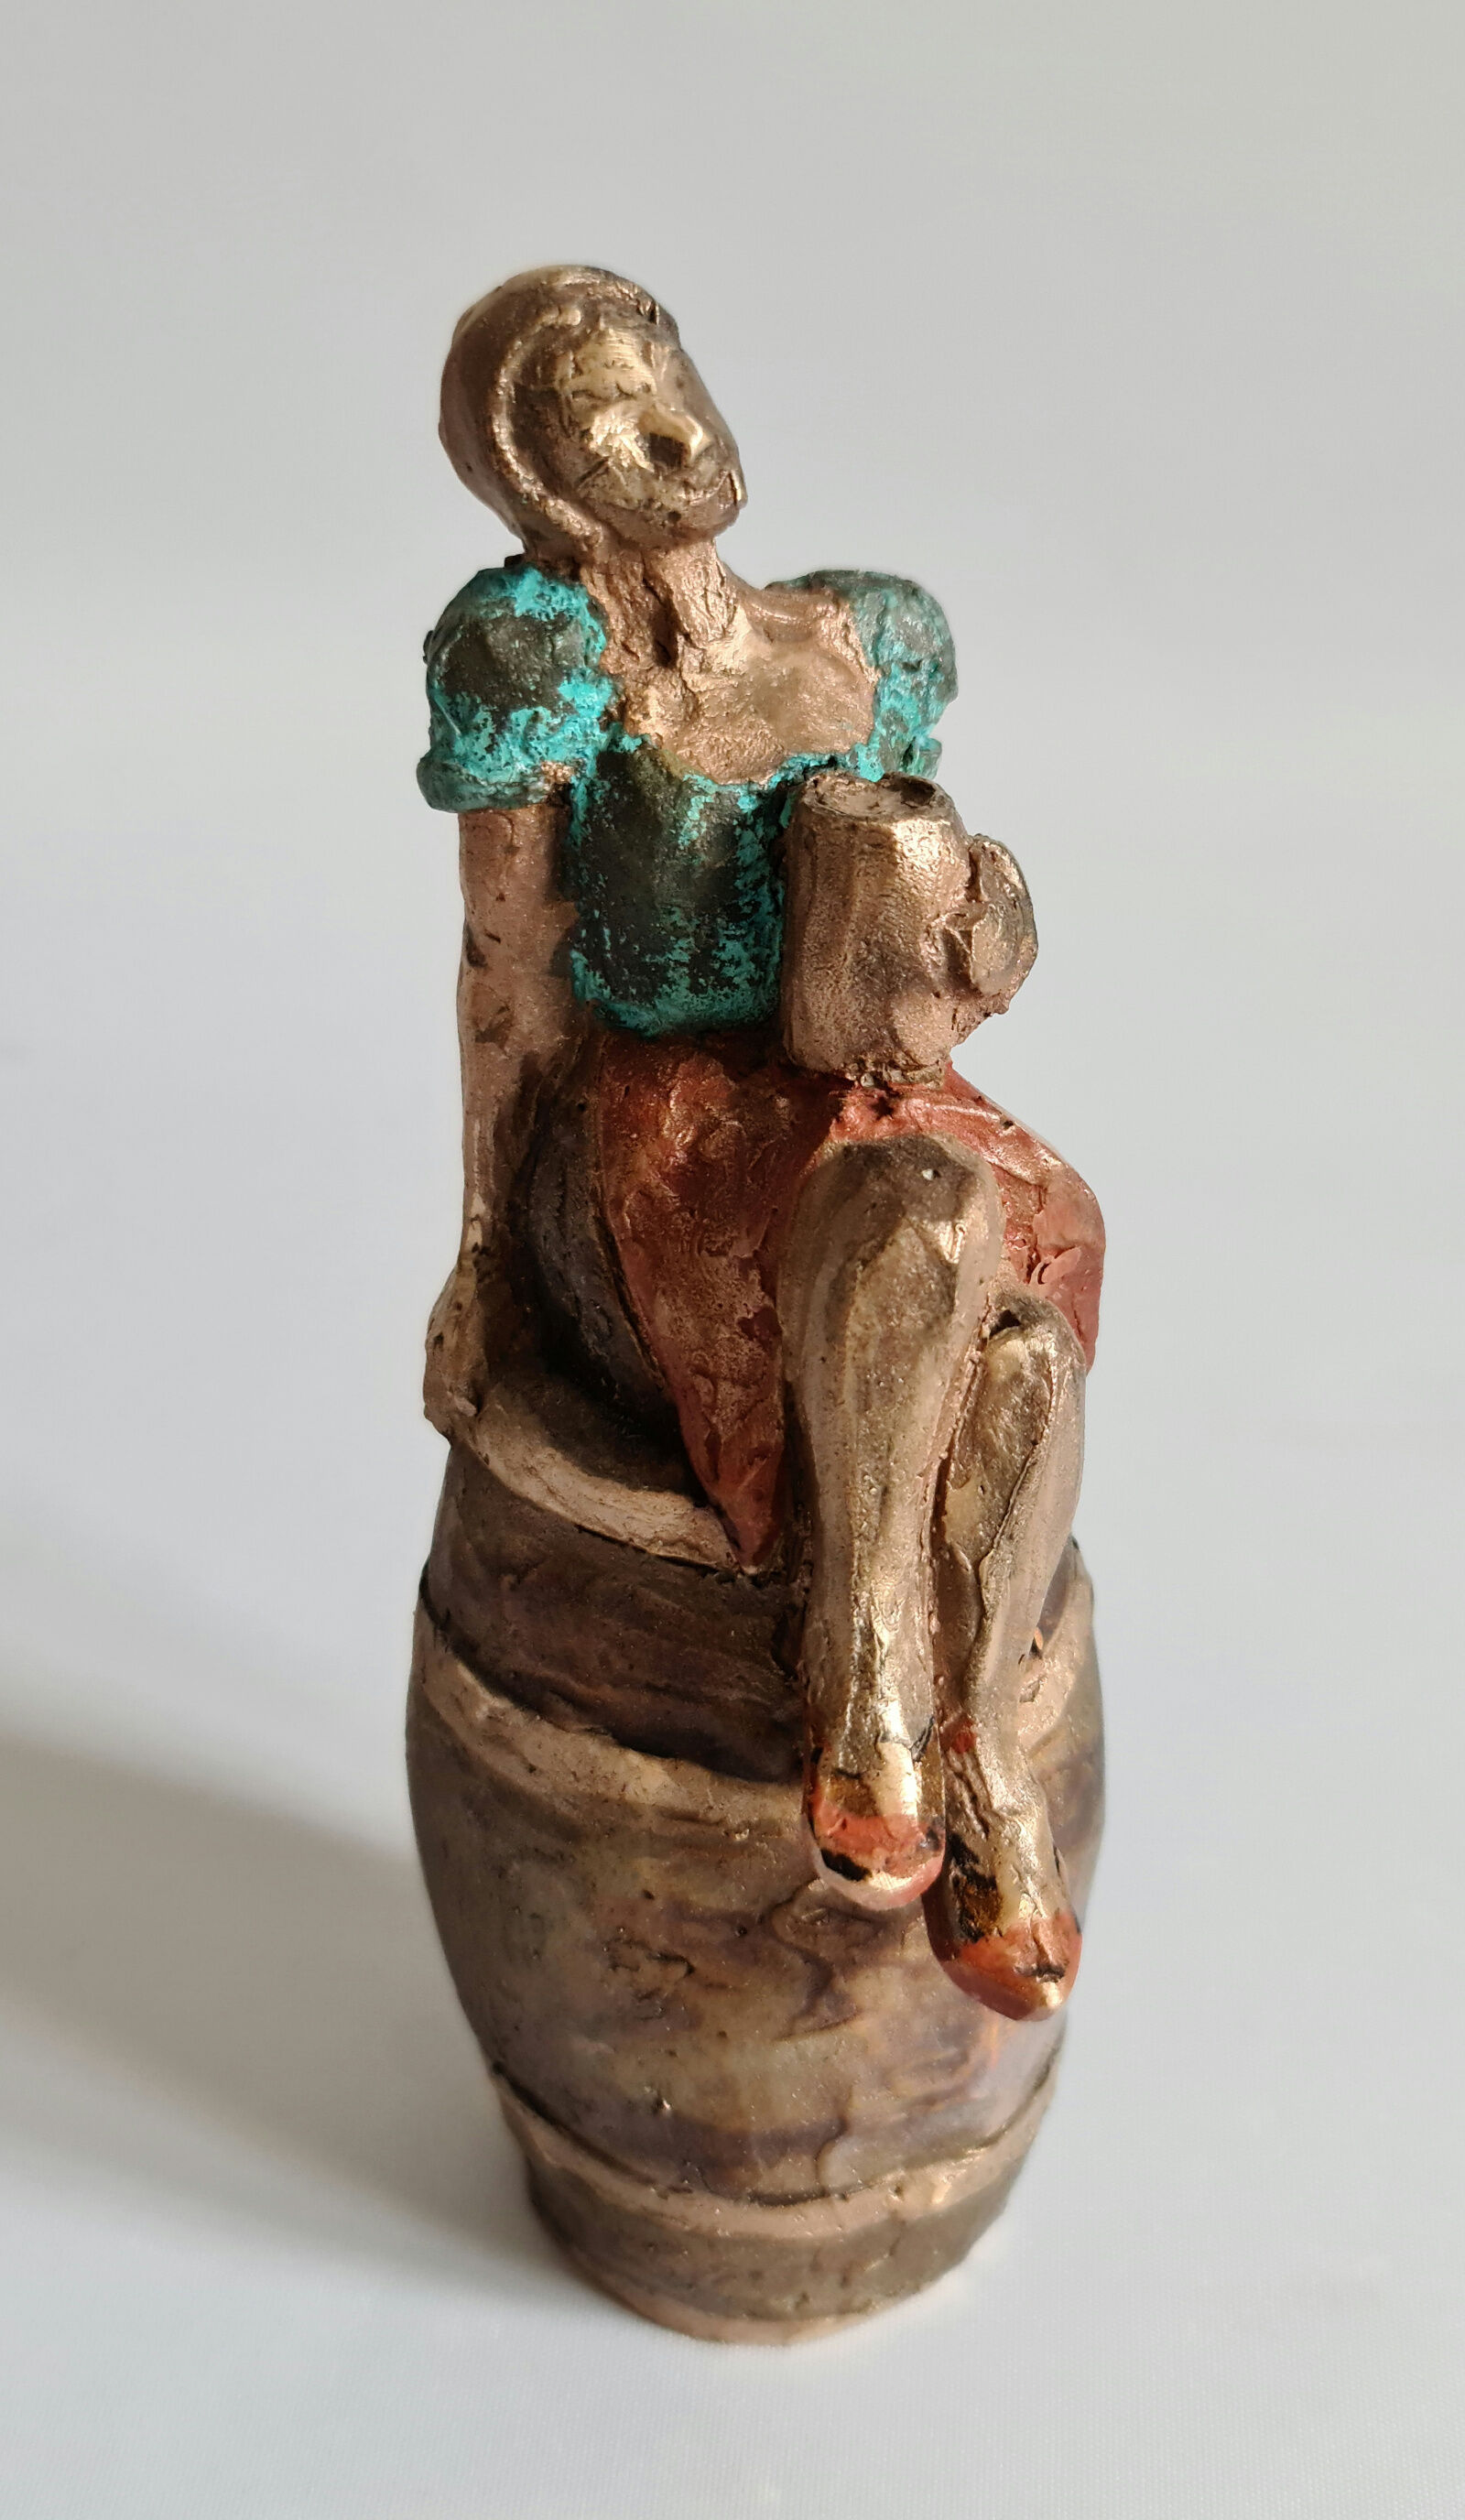 Sculpture "Biermadl (a bavarian girl)" (2021)